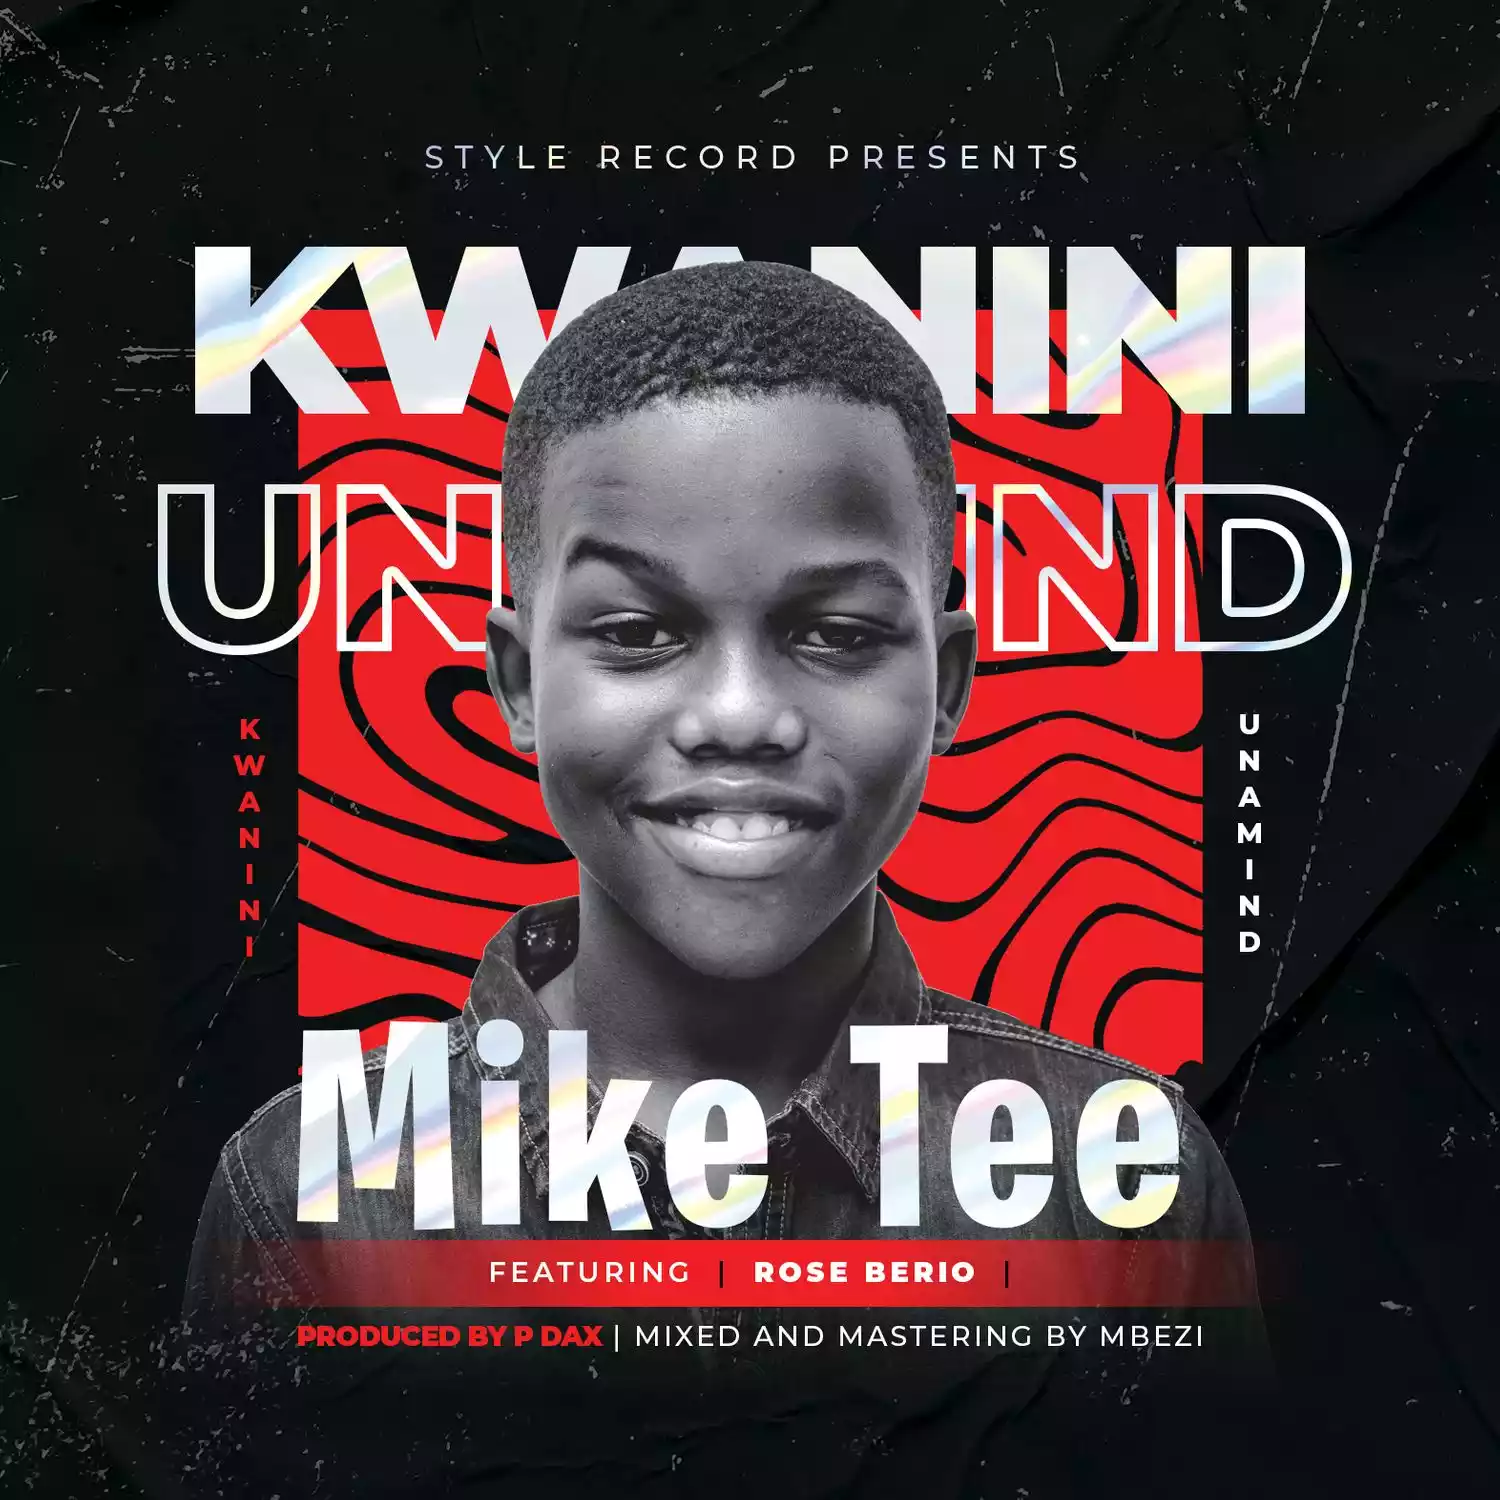 Mike Tee ft Rose Berio Kwanini Unamind Mp3 Download